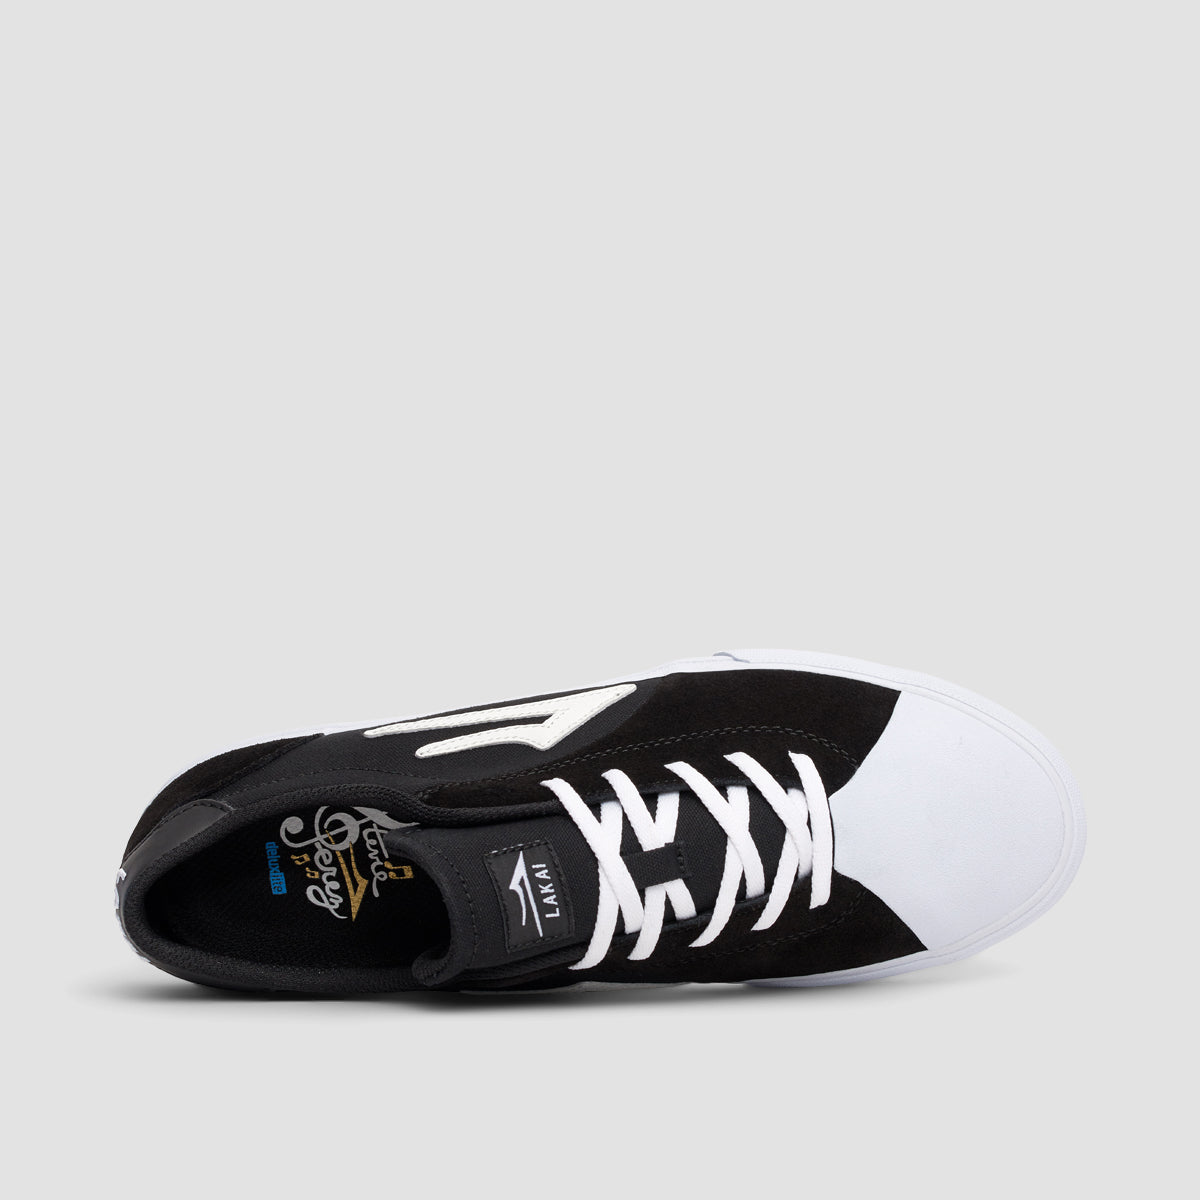 Lakai Flaco II Shoes - Black/White Suede